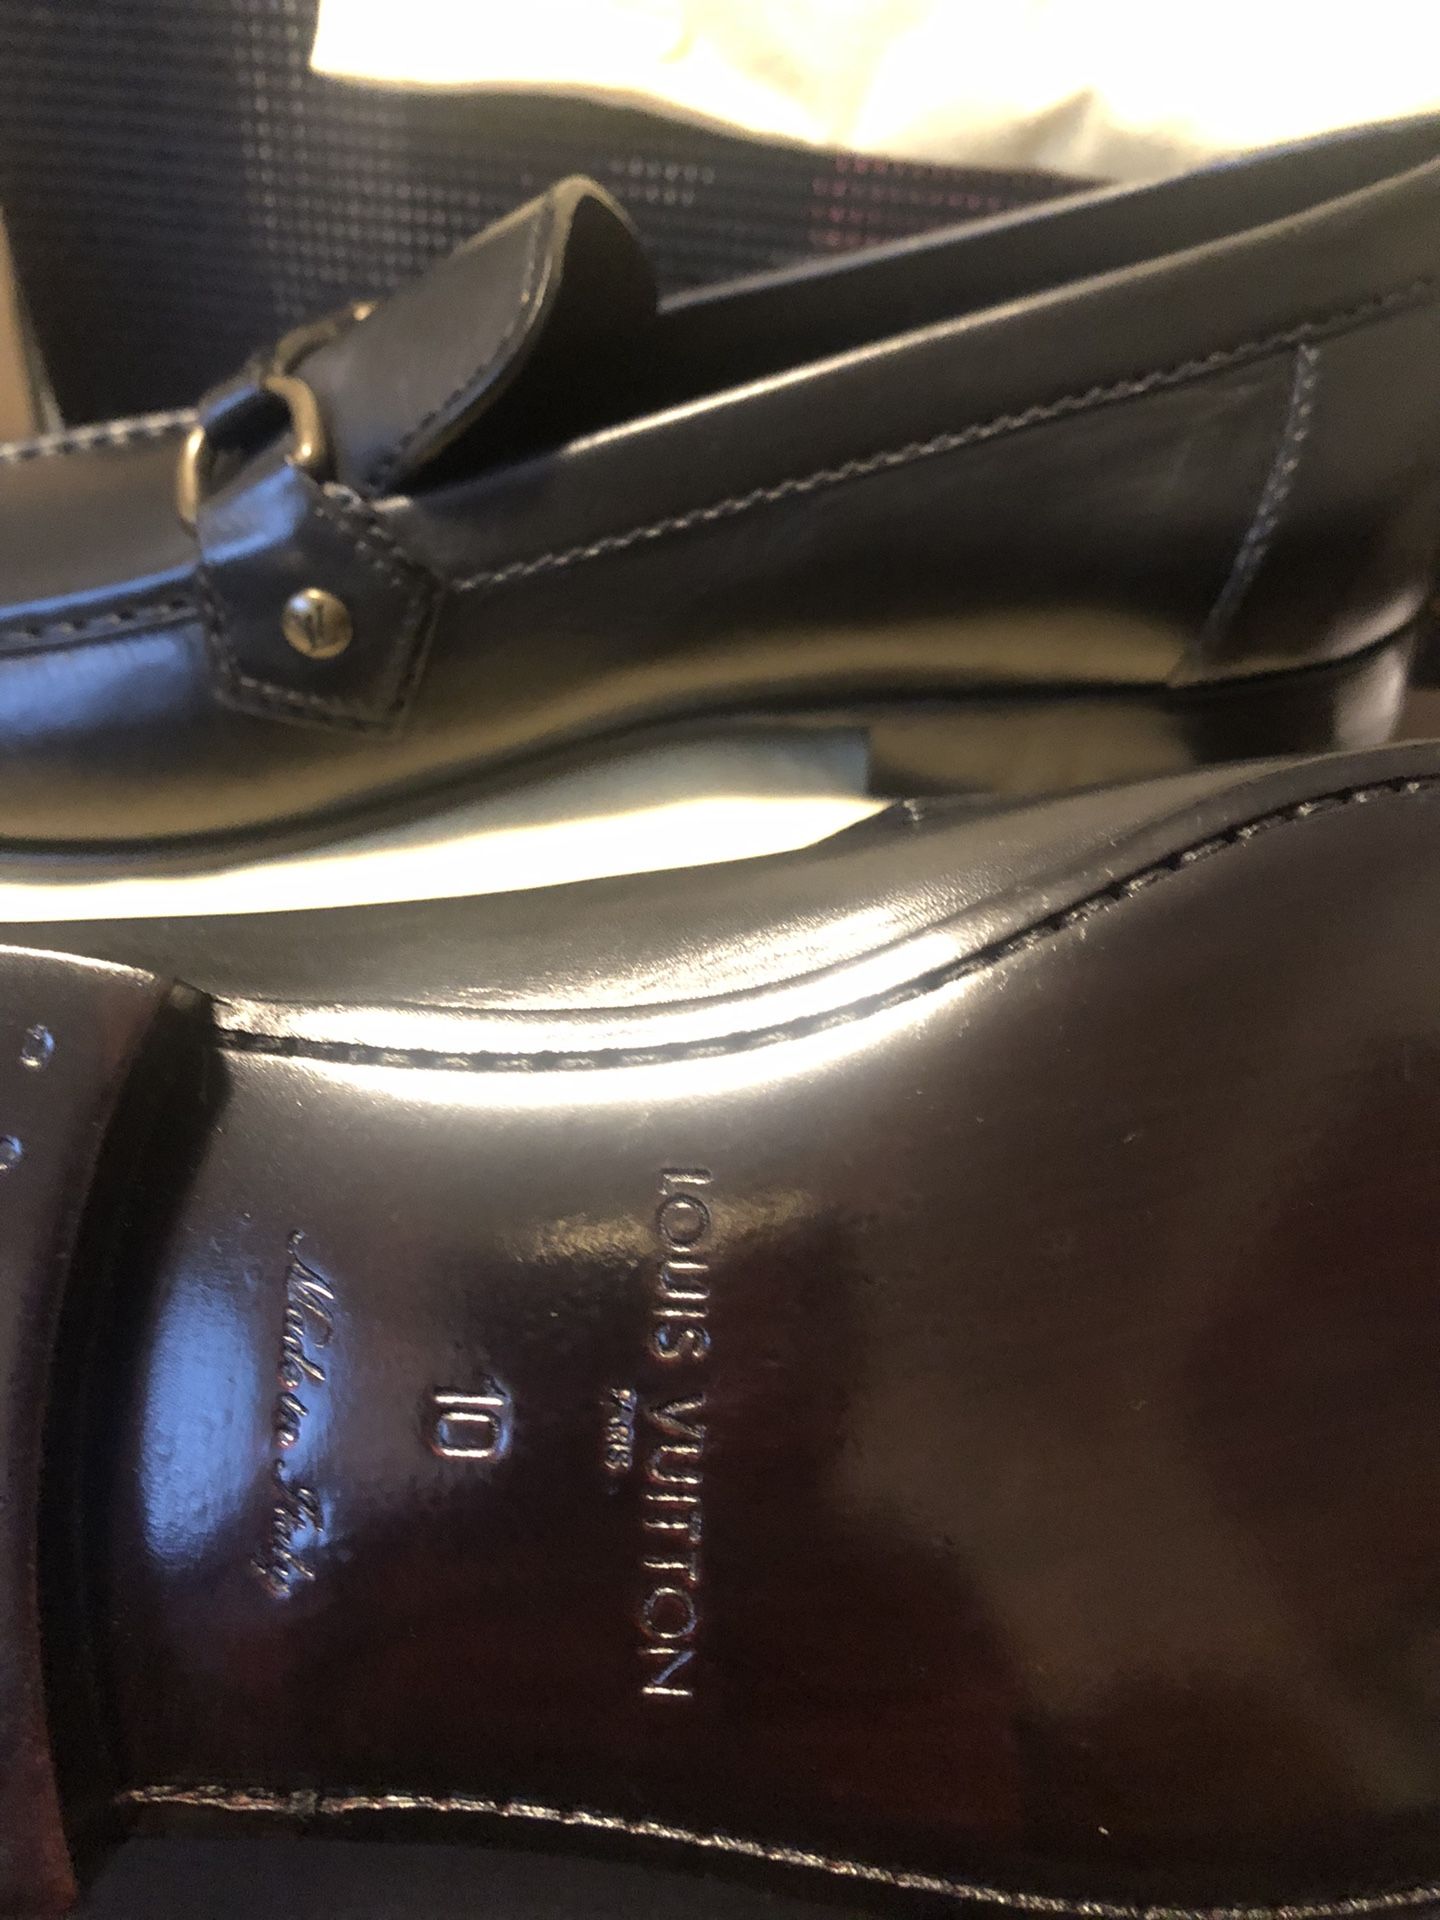 Louis Vuitton Men's Dress Shoes size 10 for Sale in Fontana, CA